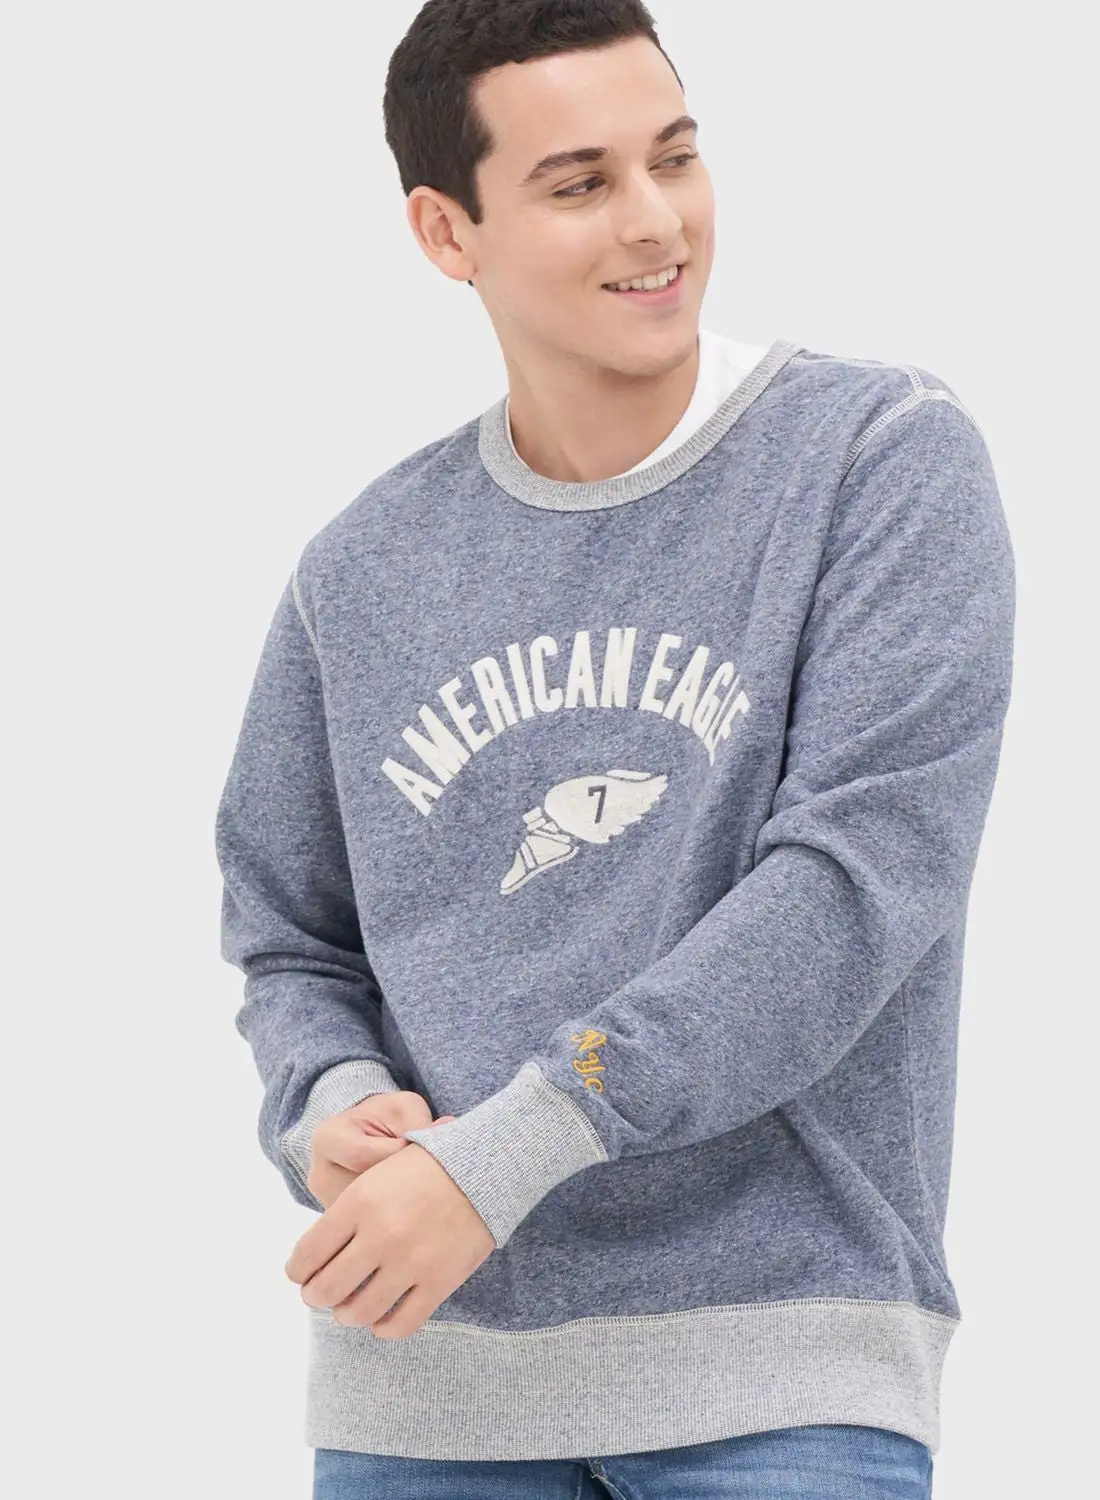 American Eagle Slogan Sweatshirt